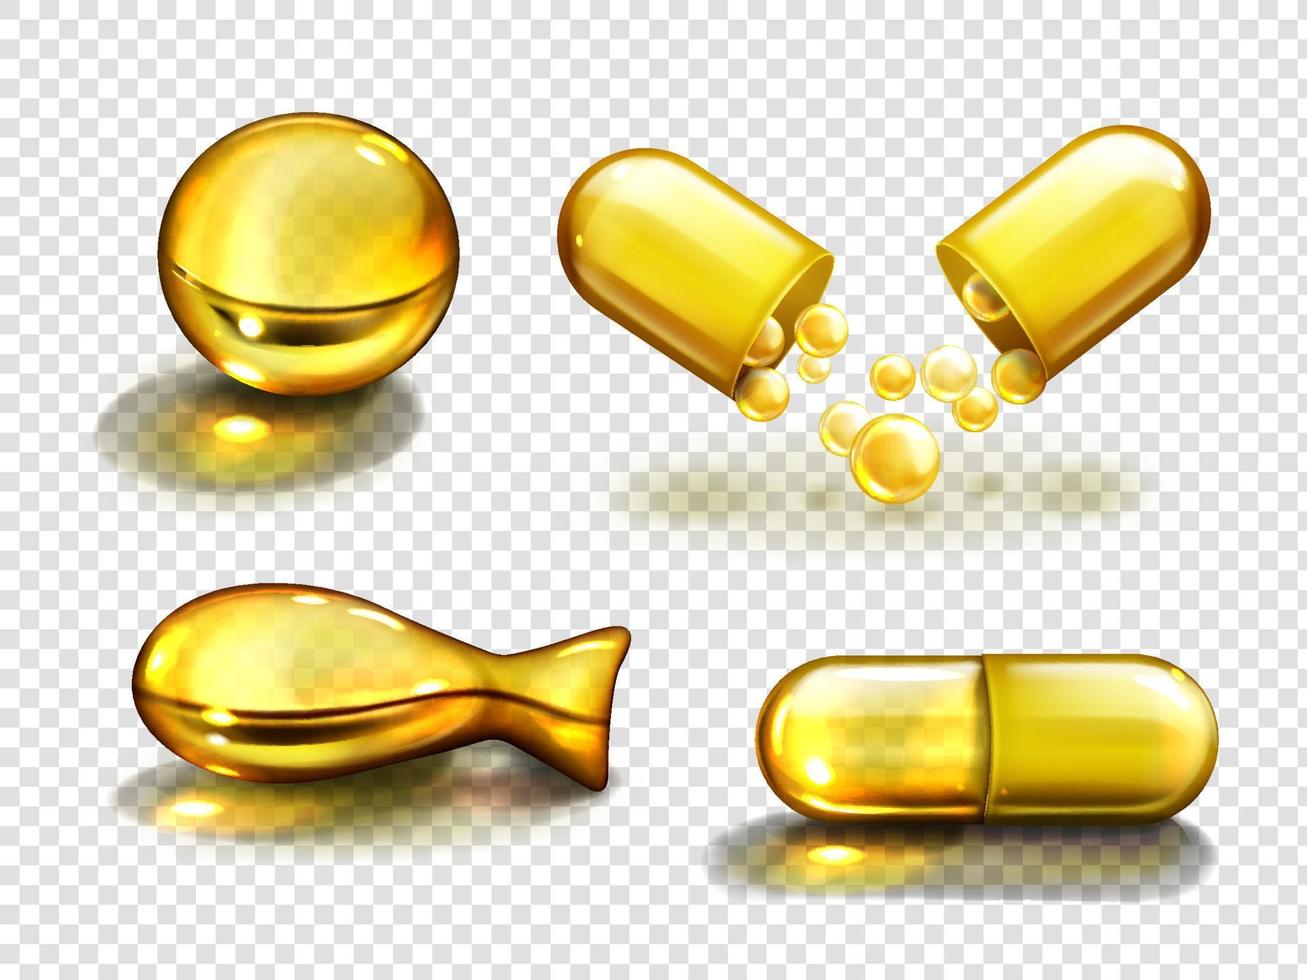 Gold oil capsules, vitamine supplements, collagen vector